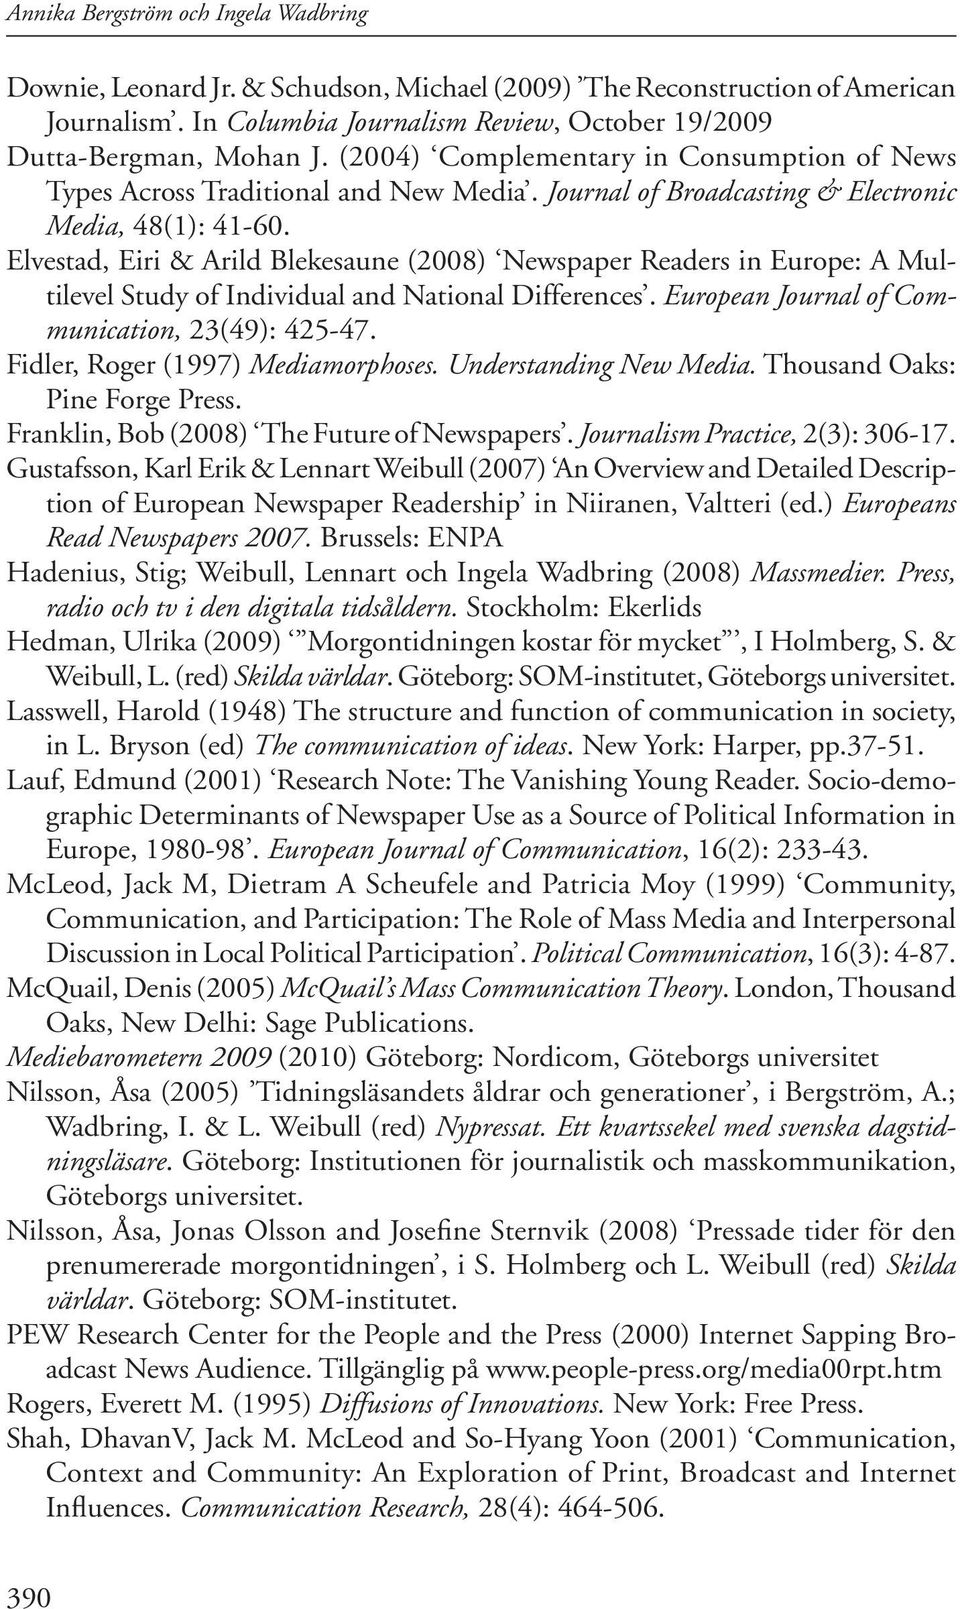 Elvestad, Eiri & Arild Blekesaune (2008) Newspaper Readers in Europe: A Multilevel Study of Individual and National Differences. European Journal of Communication, 23(49): 425-47.